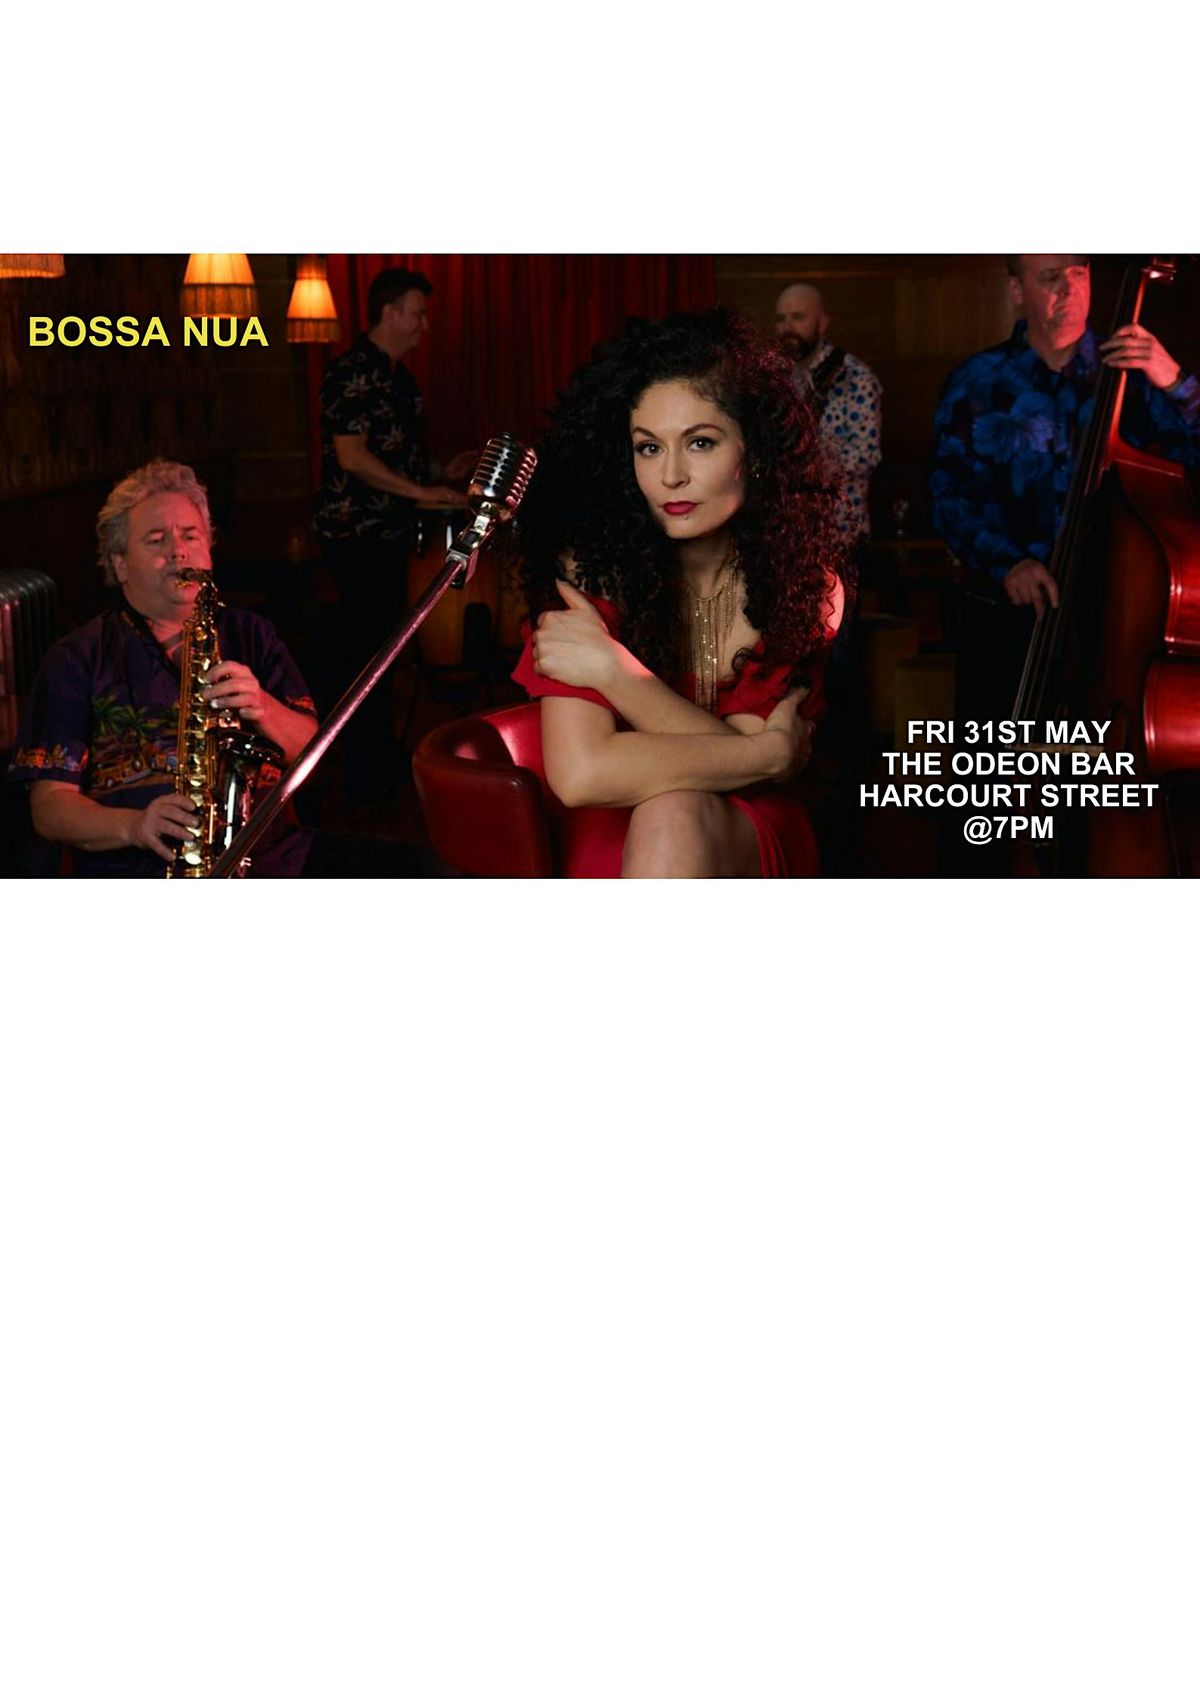 BOSSA NOVA GIG: Bossa Nua Brazillian Jazz Live